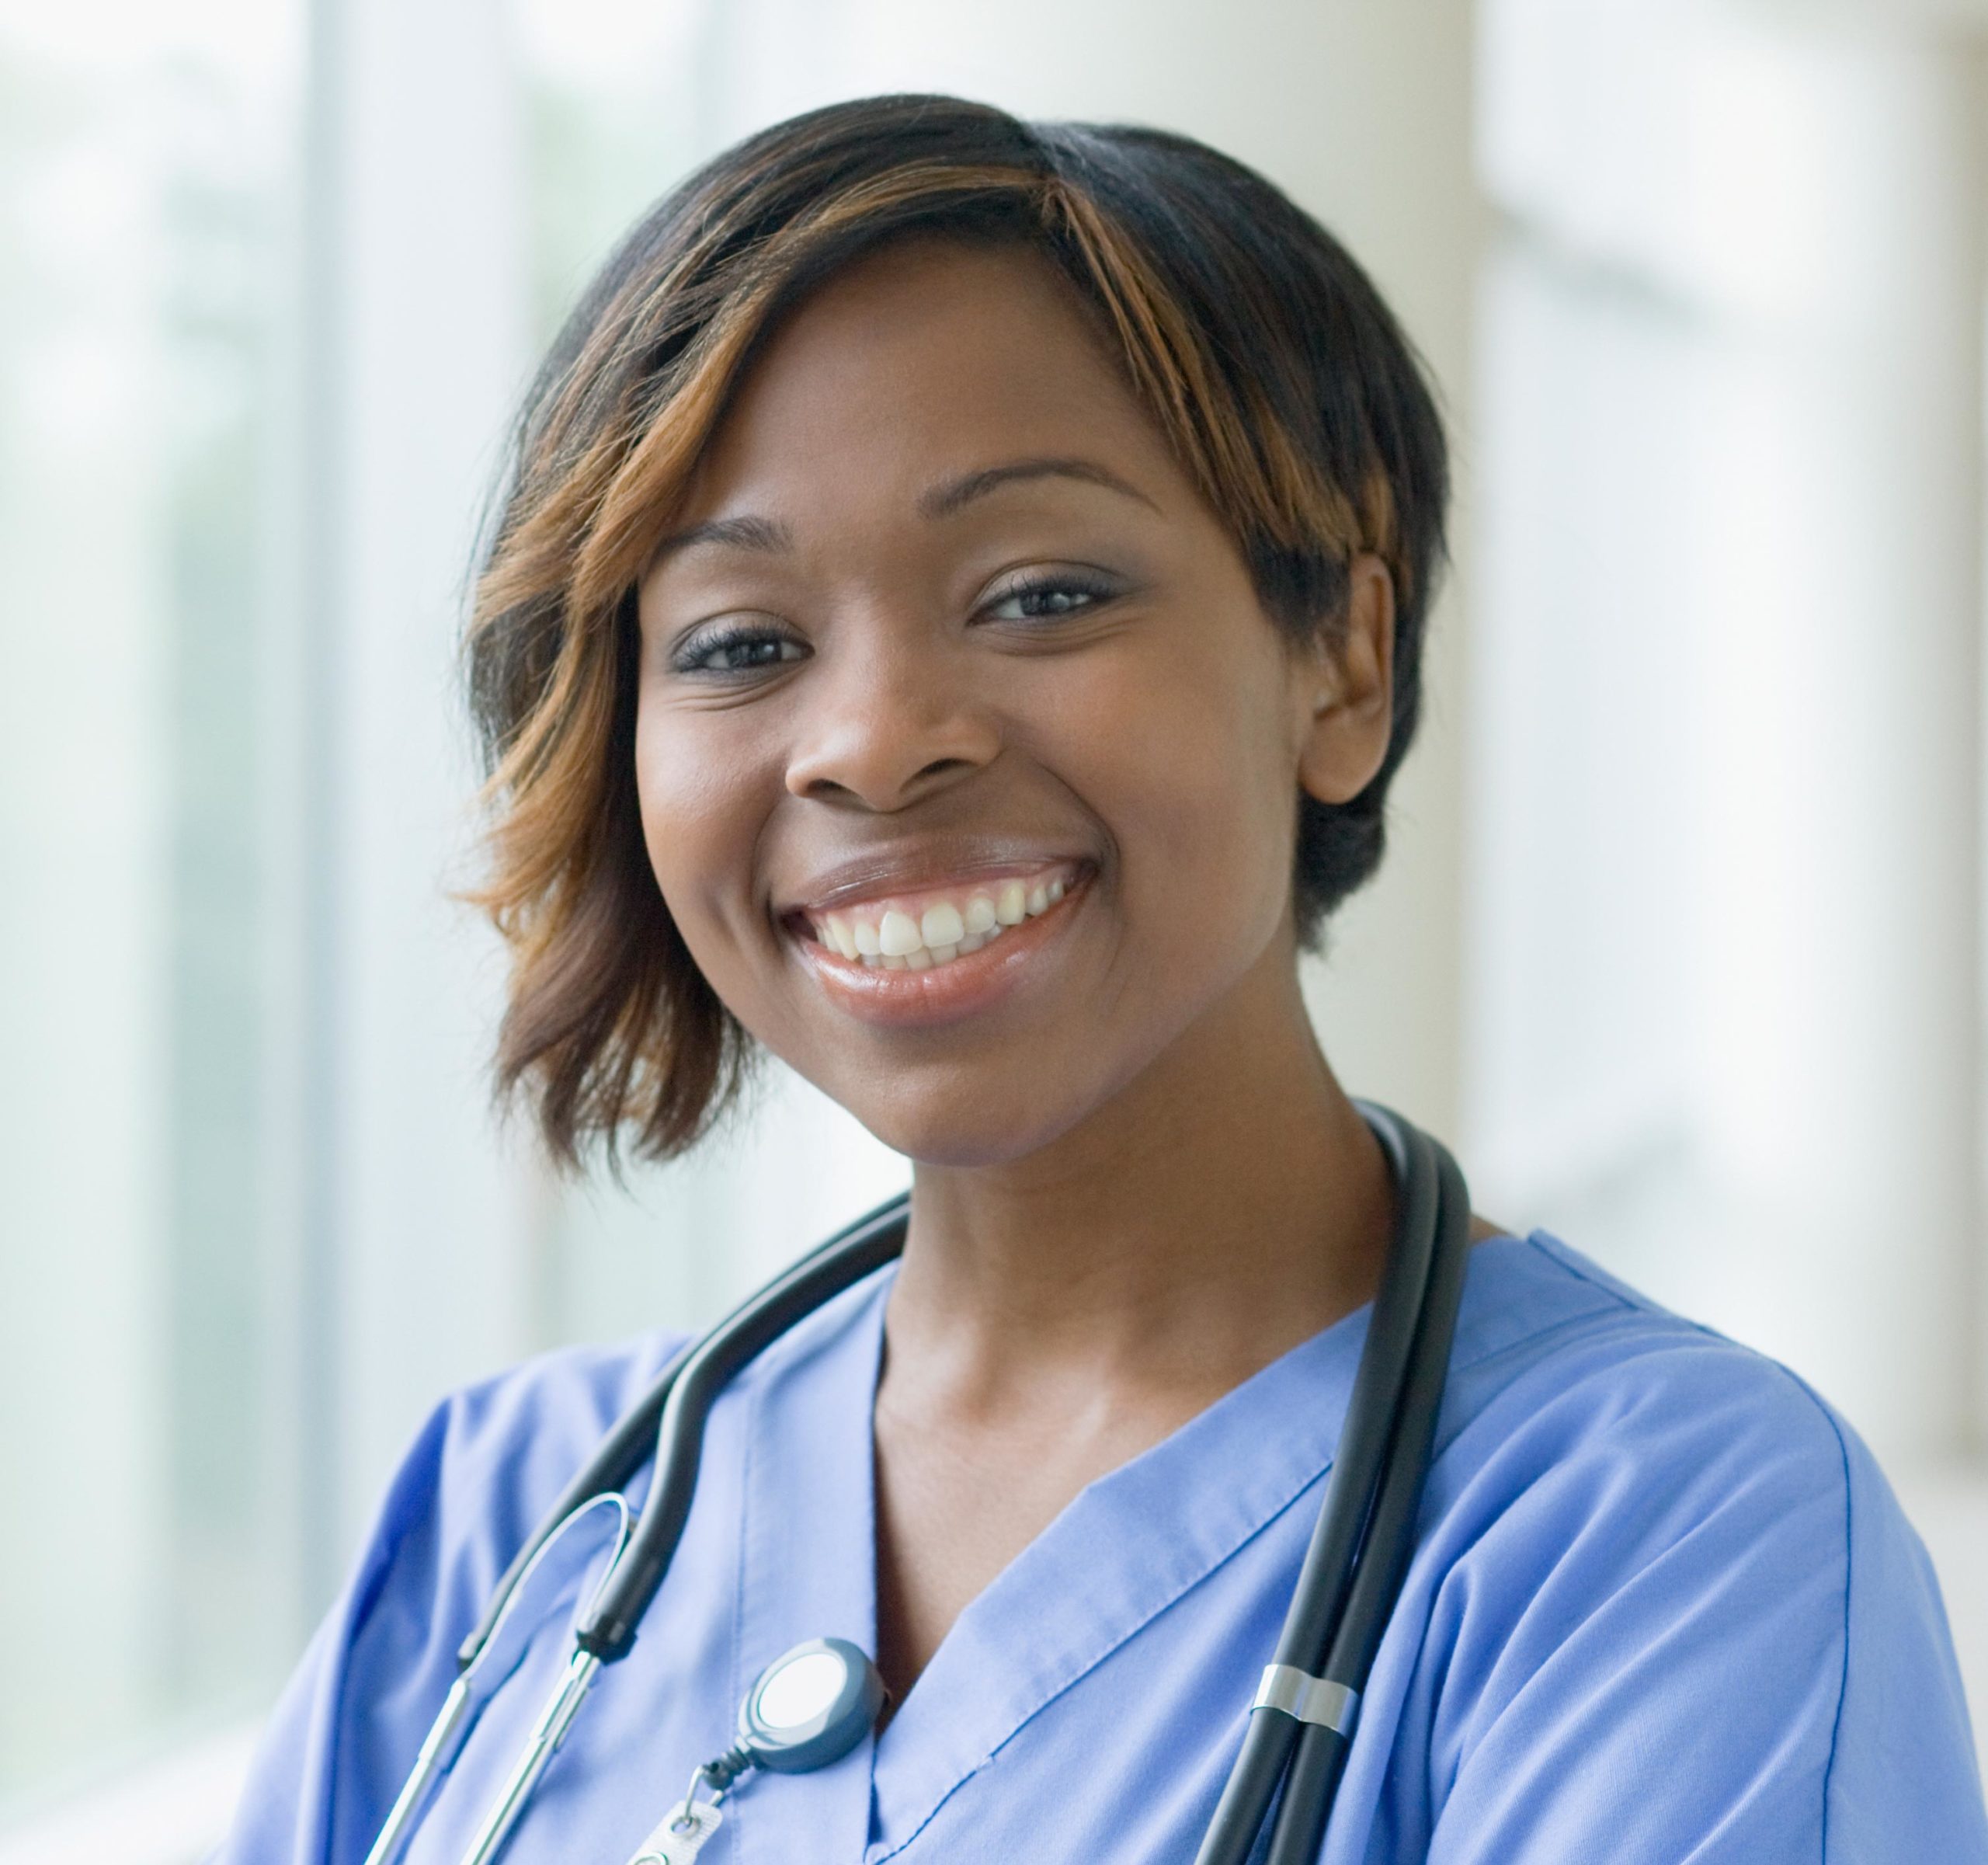 Nurse recognition programs